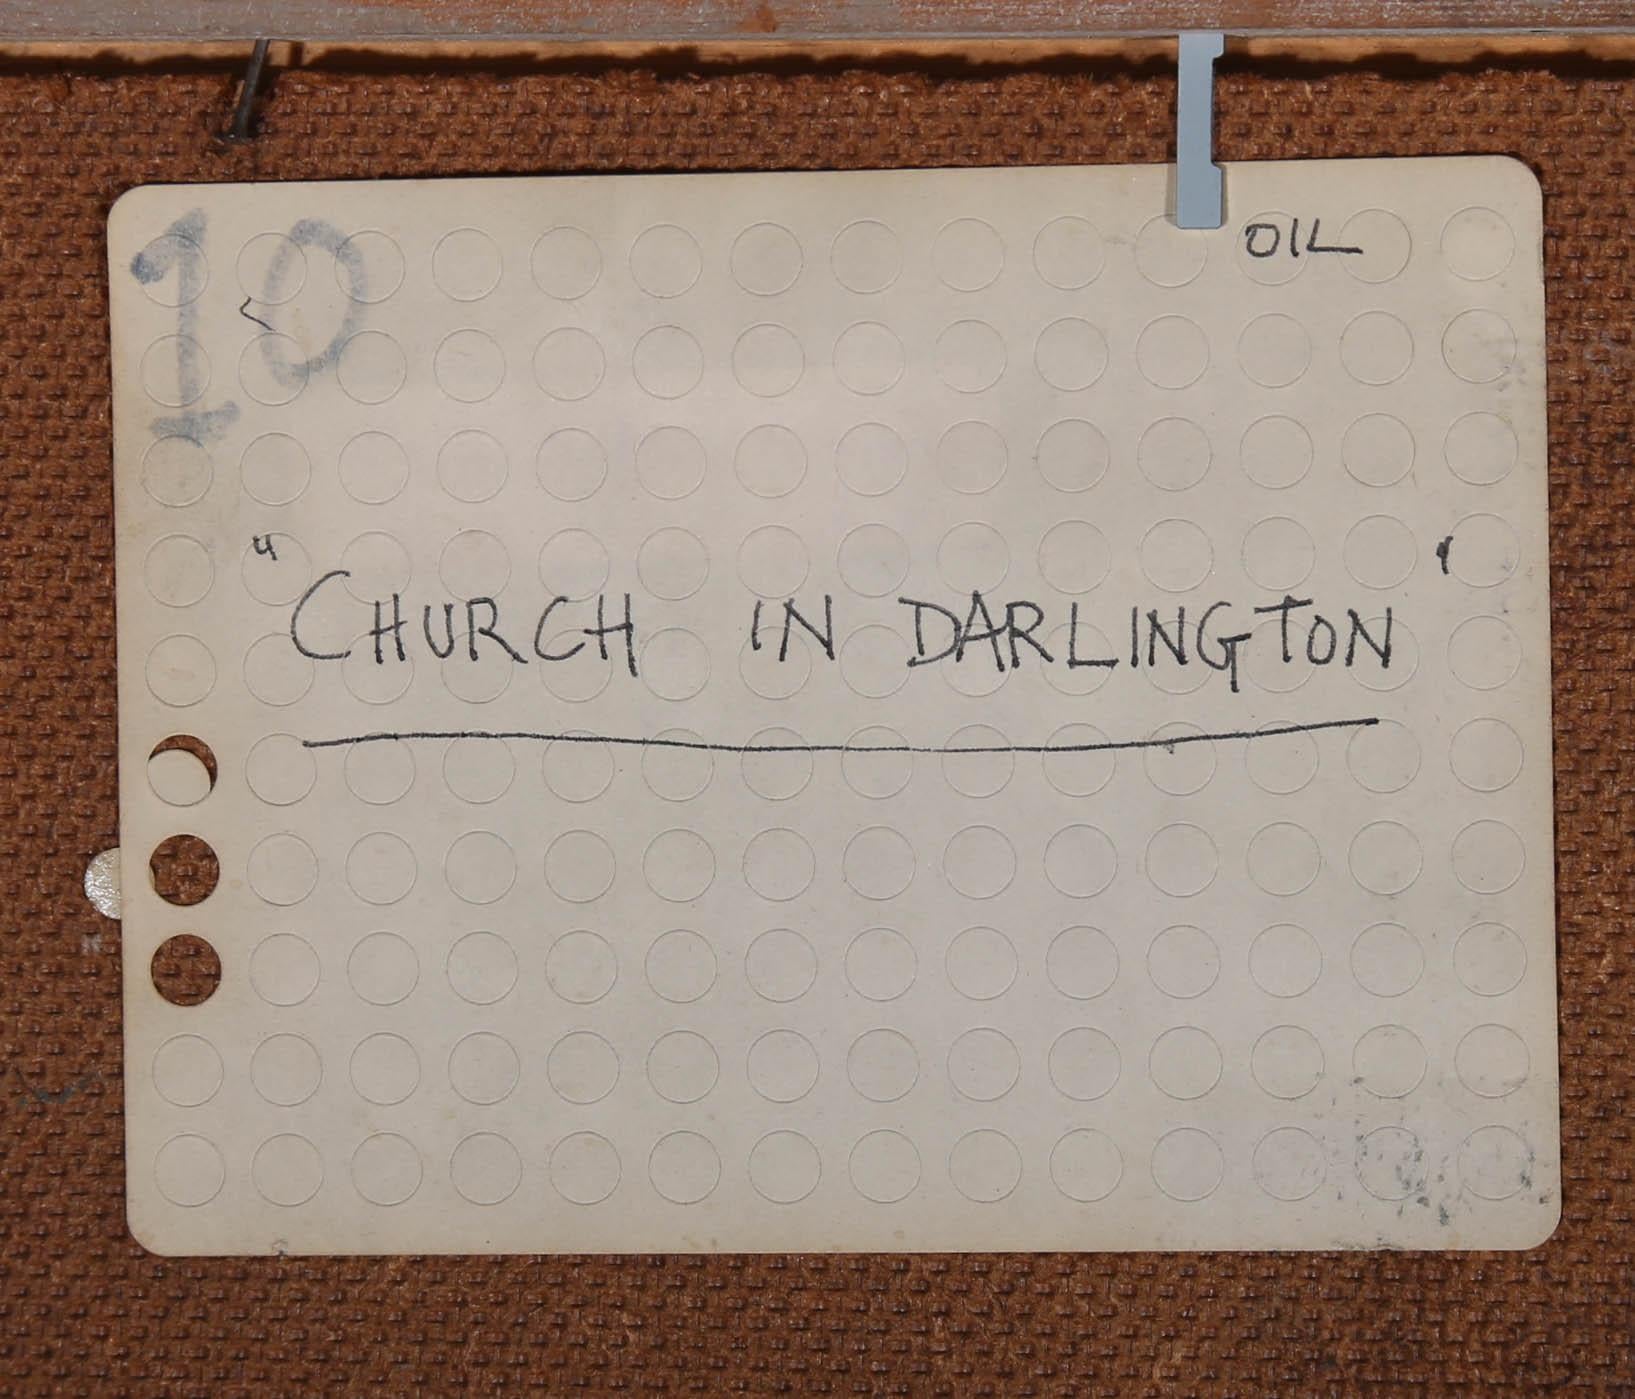 Douglas Pittuck (1911-1993) - 1961 Oil, Church - Darlington 3